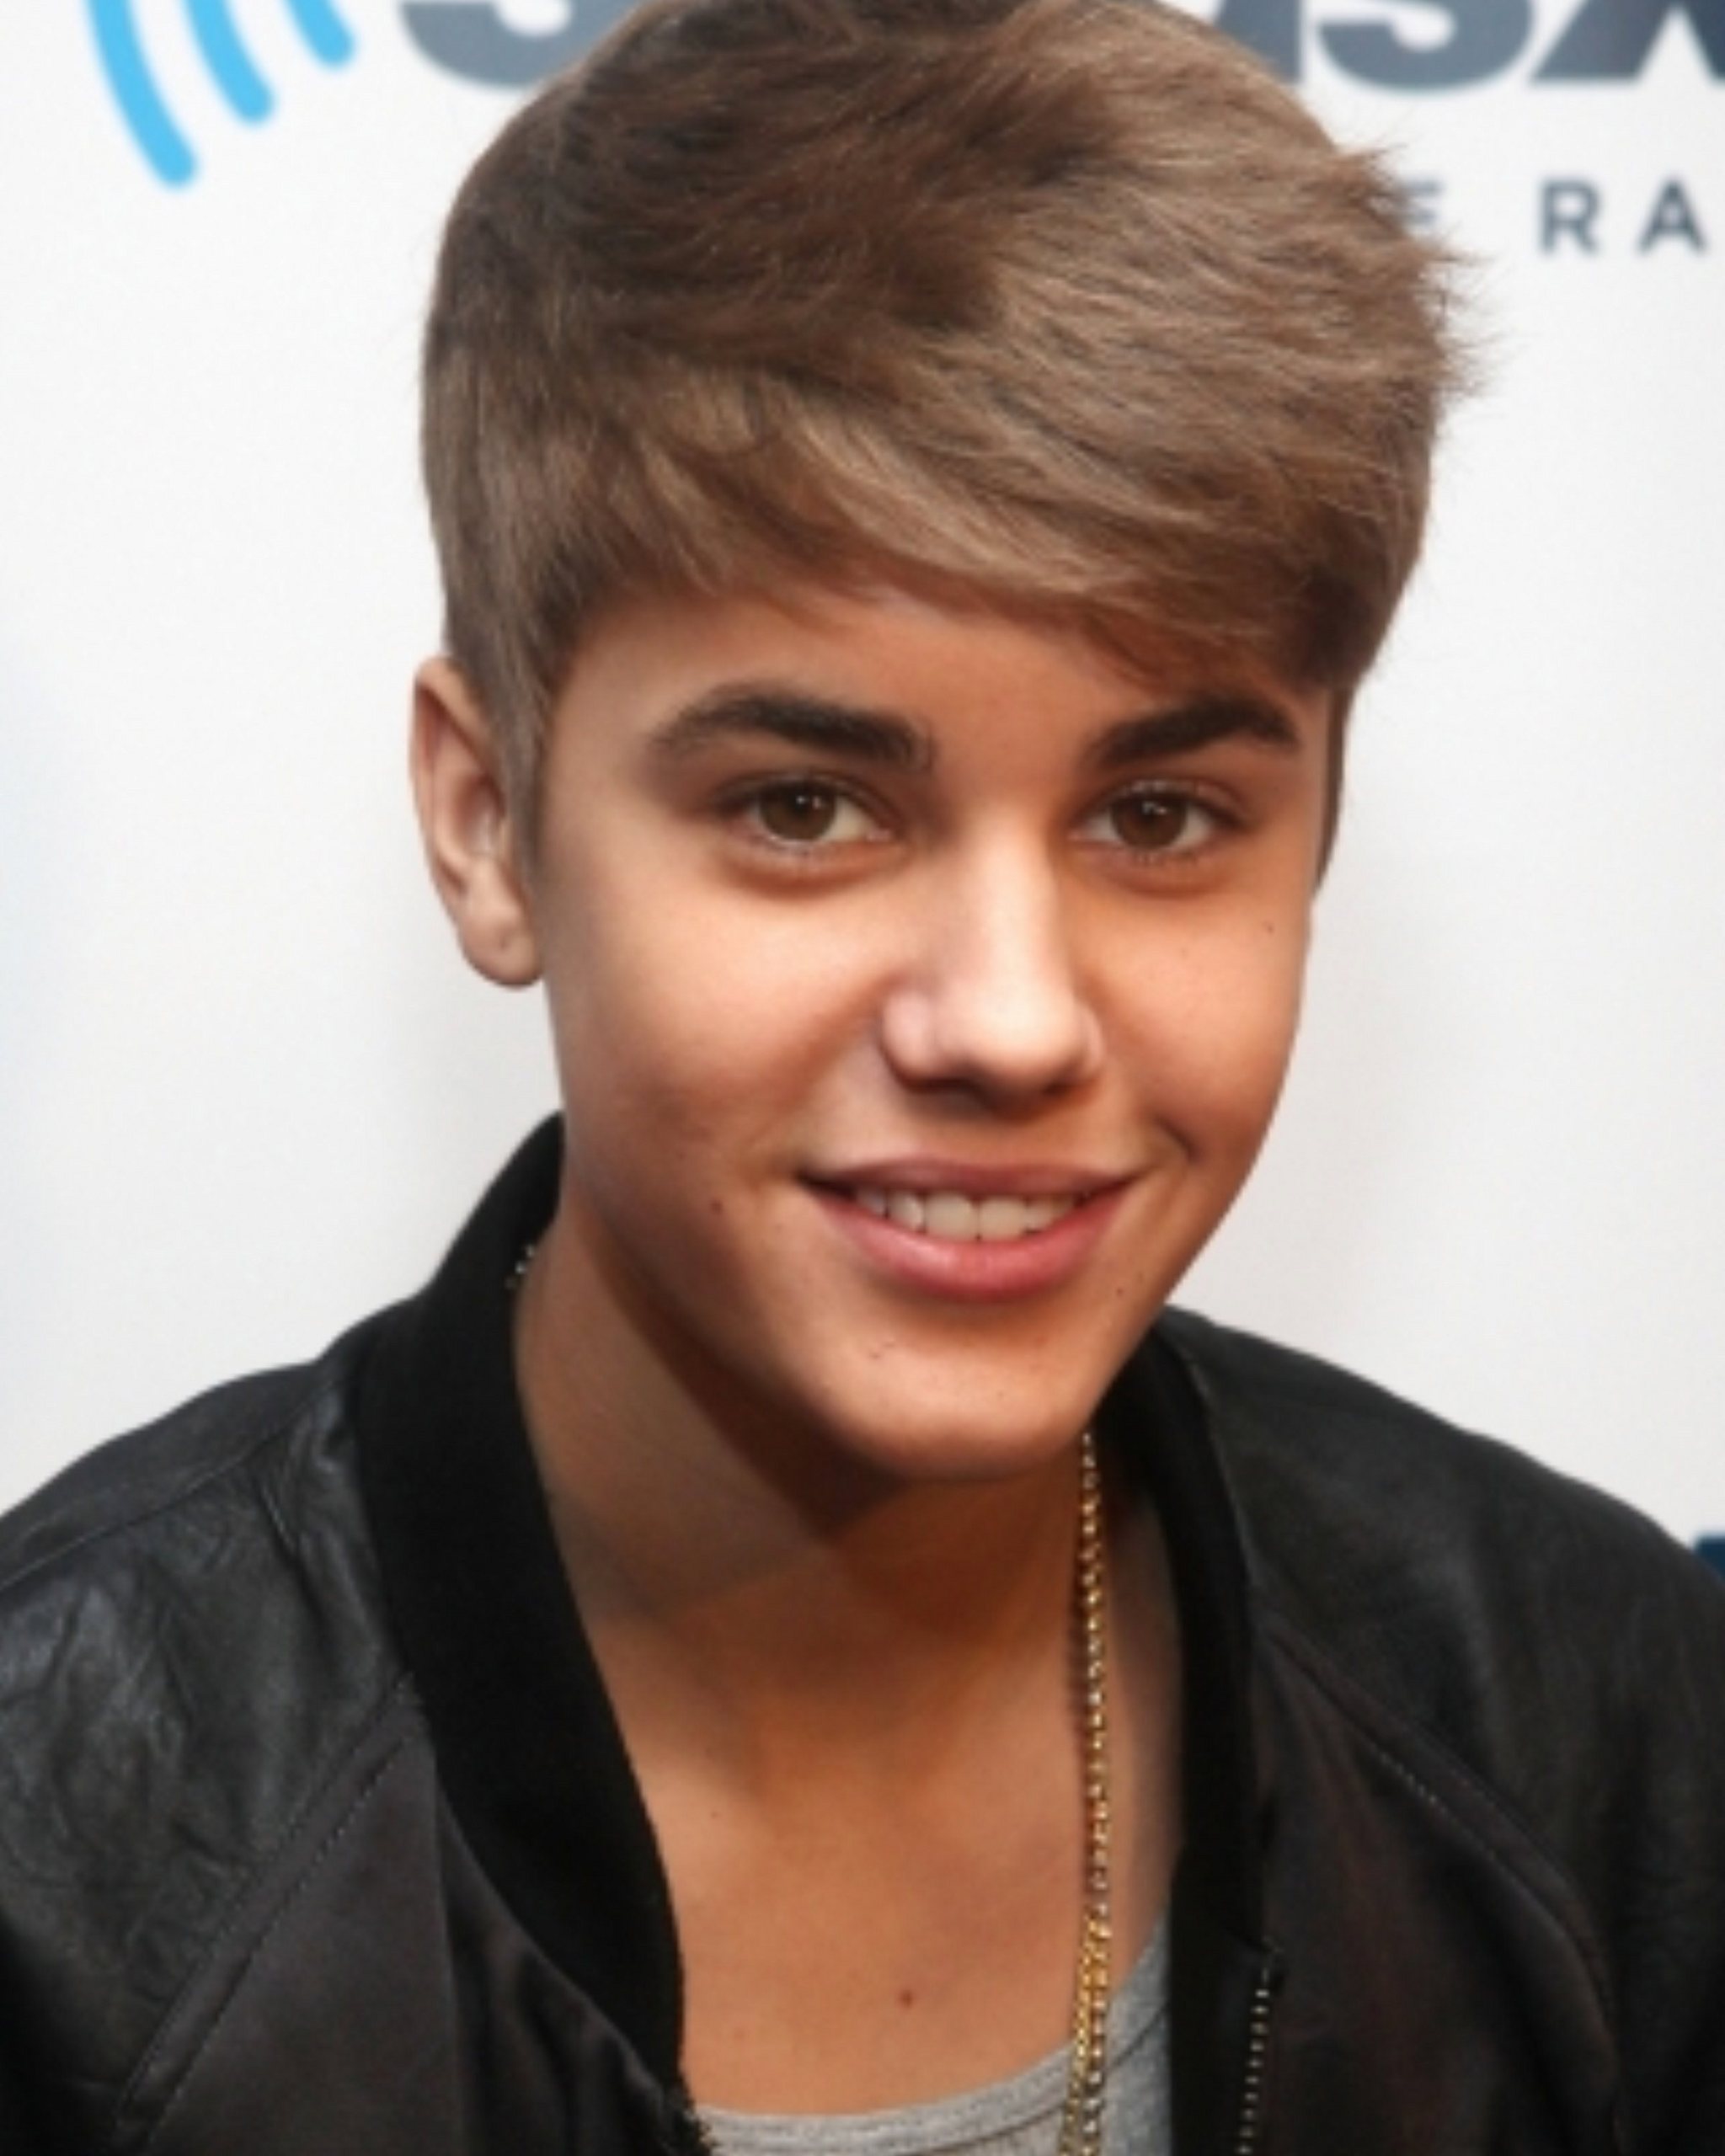 justin bieber,NYC, 2012 - Justin Bieber Photo (31146426) - Fanpop